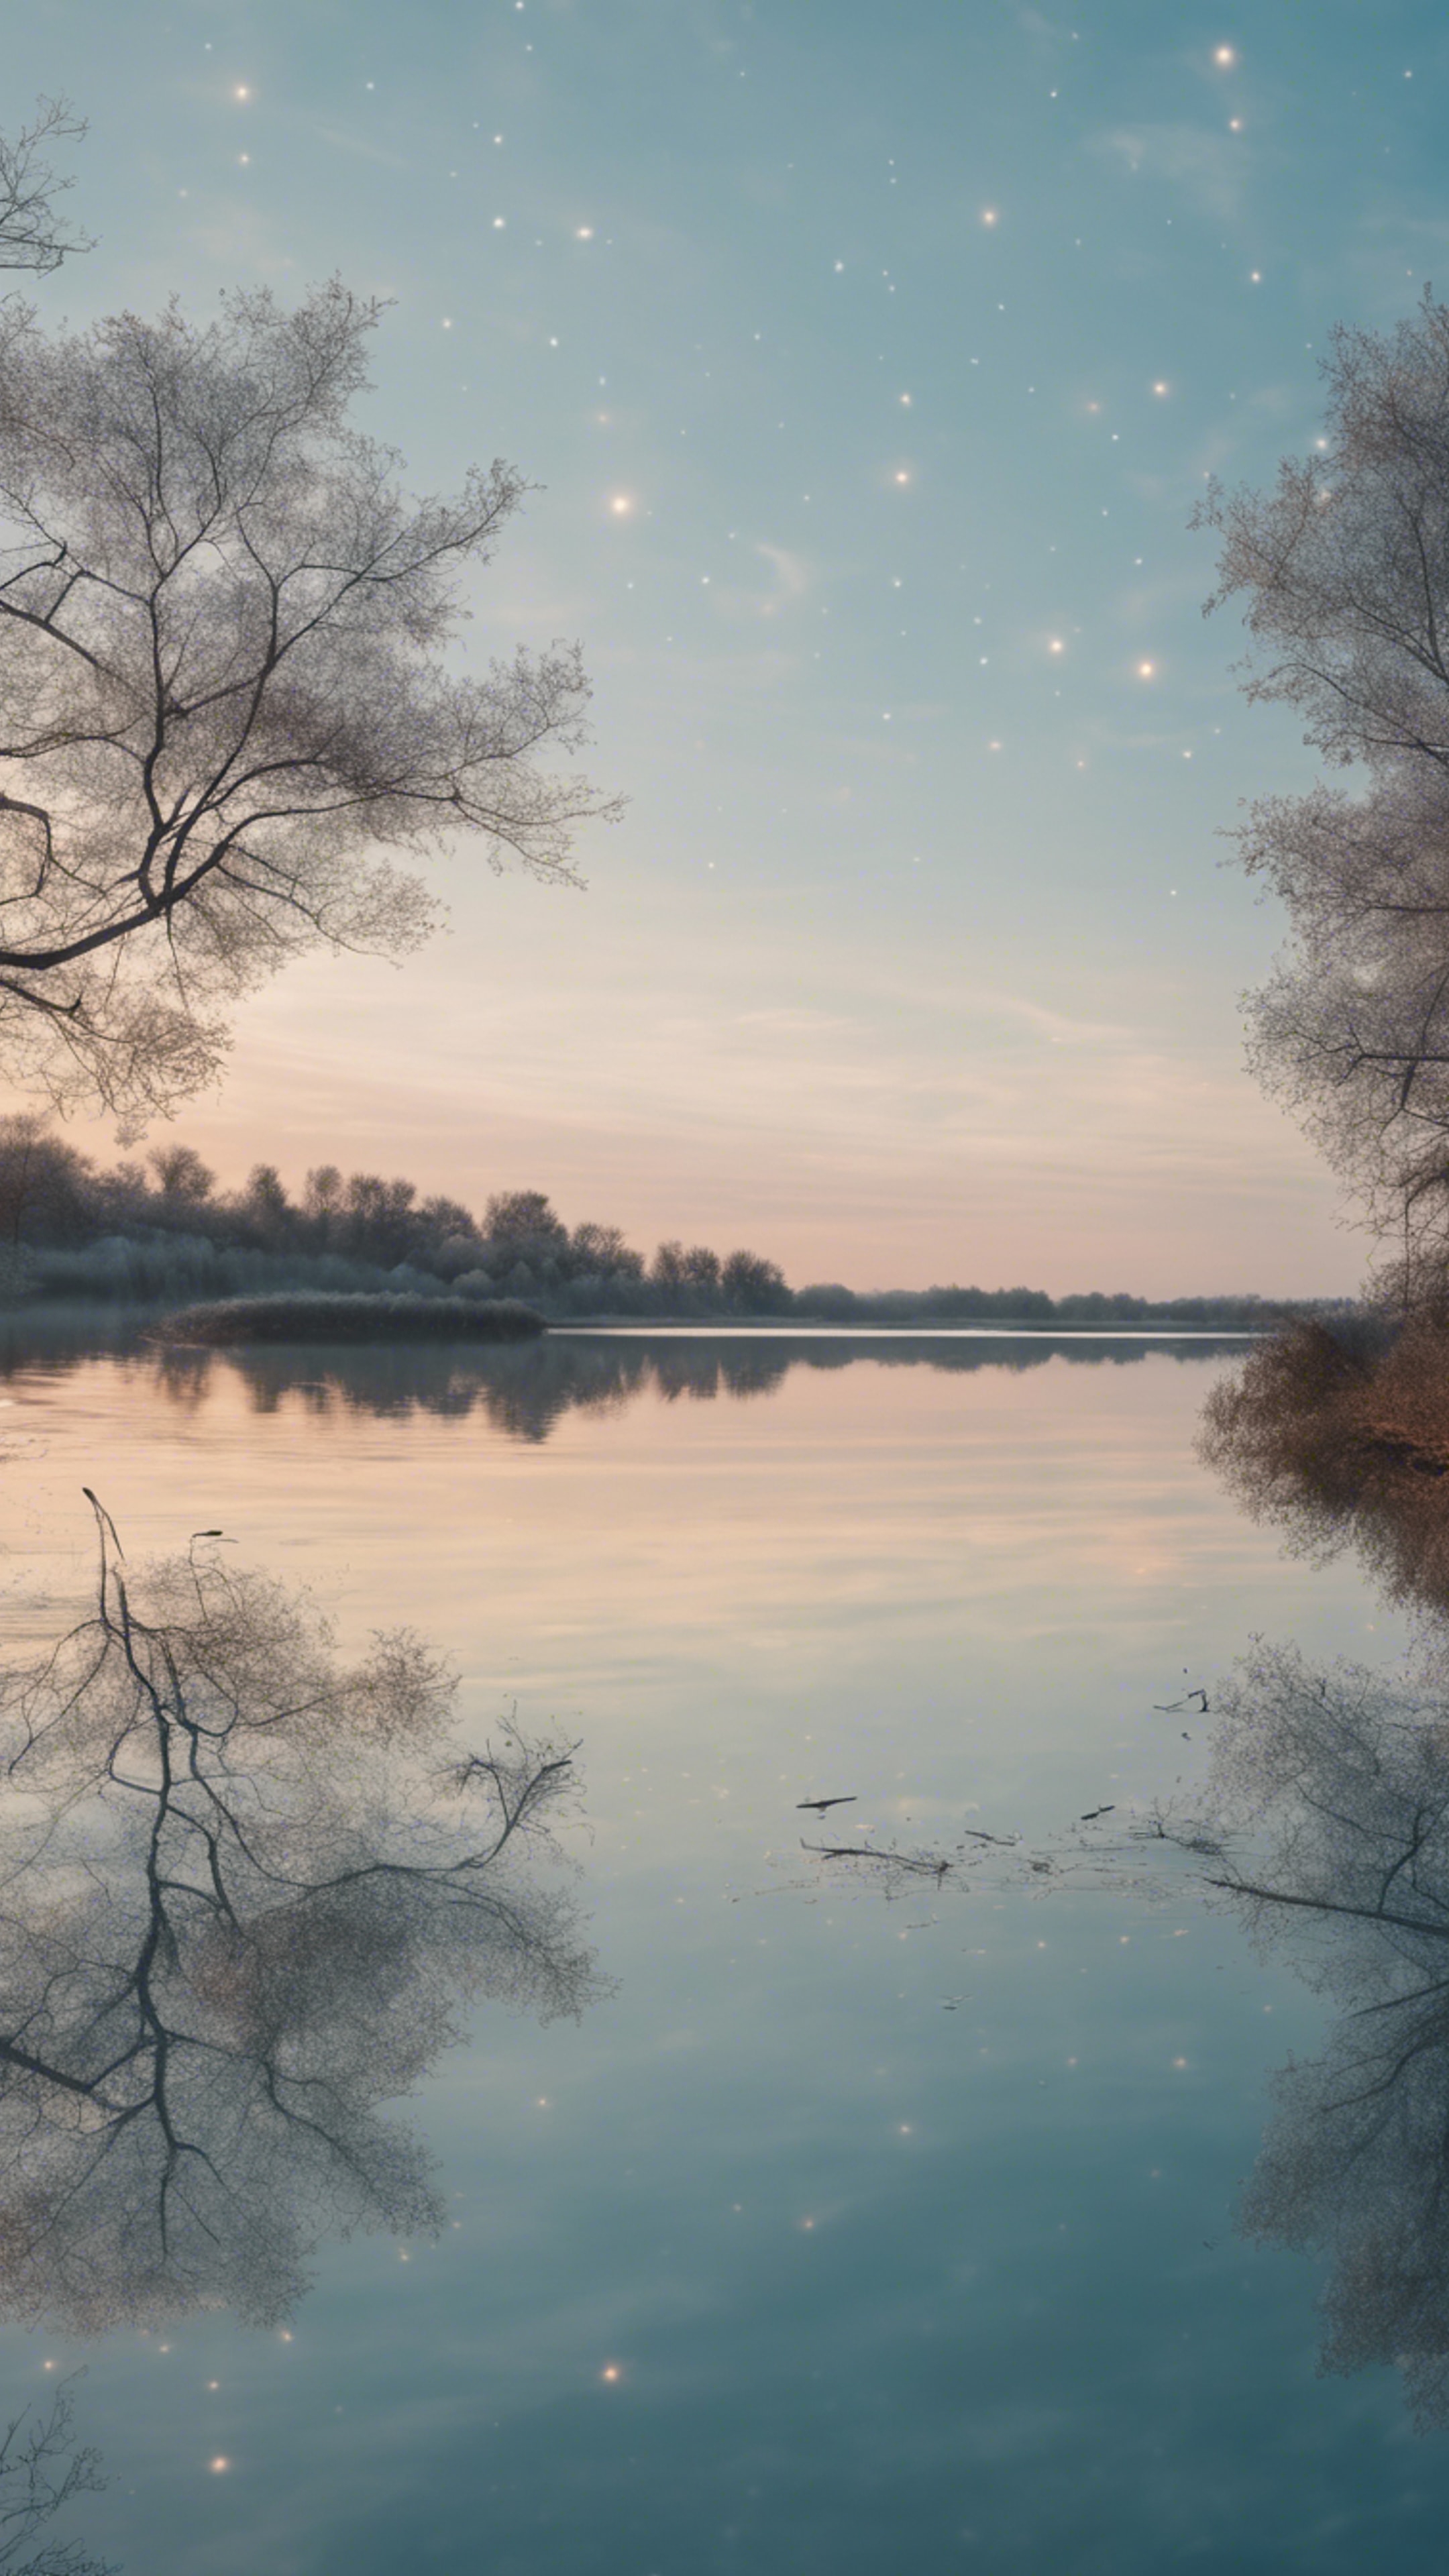 A pastel blue sky at dawn reflecting on a tranquil lake.壁紙[f0afb54b812141669b7c]